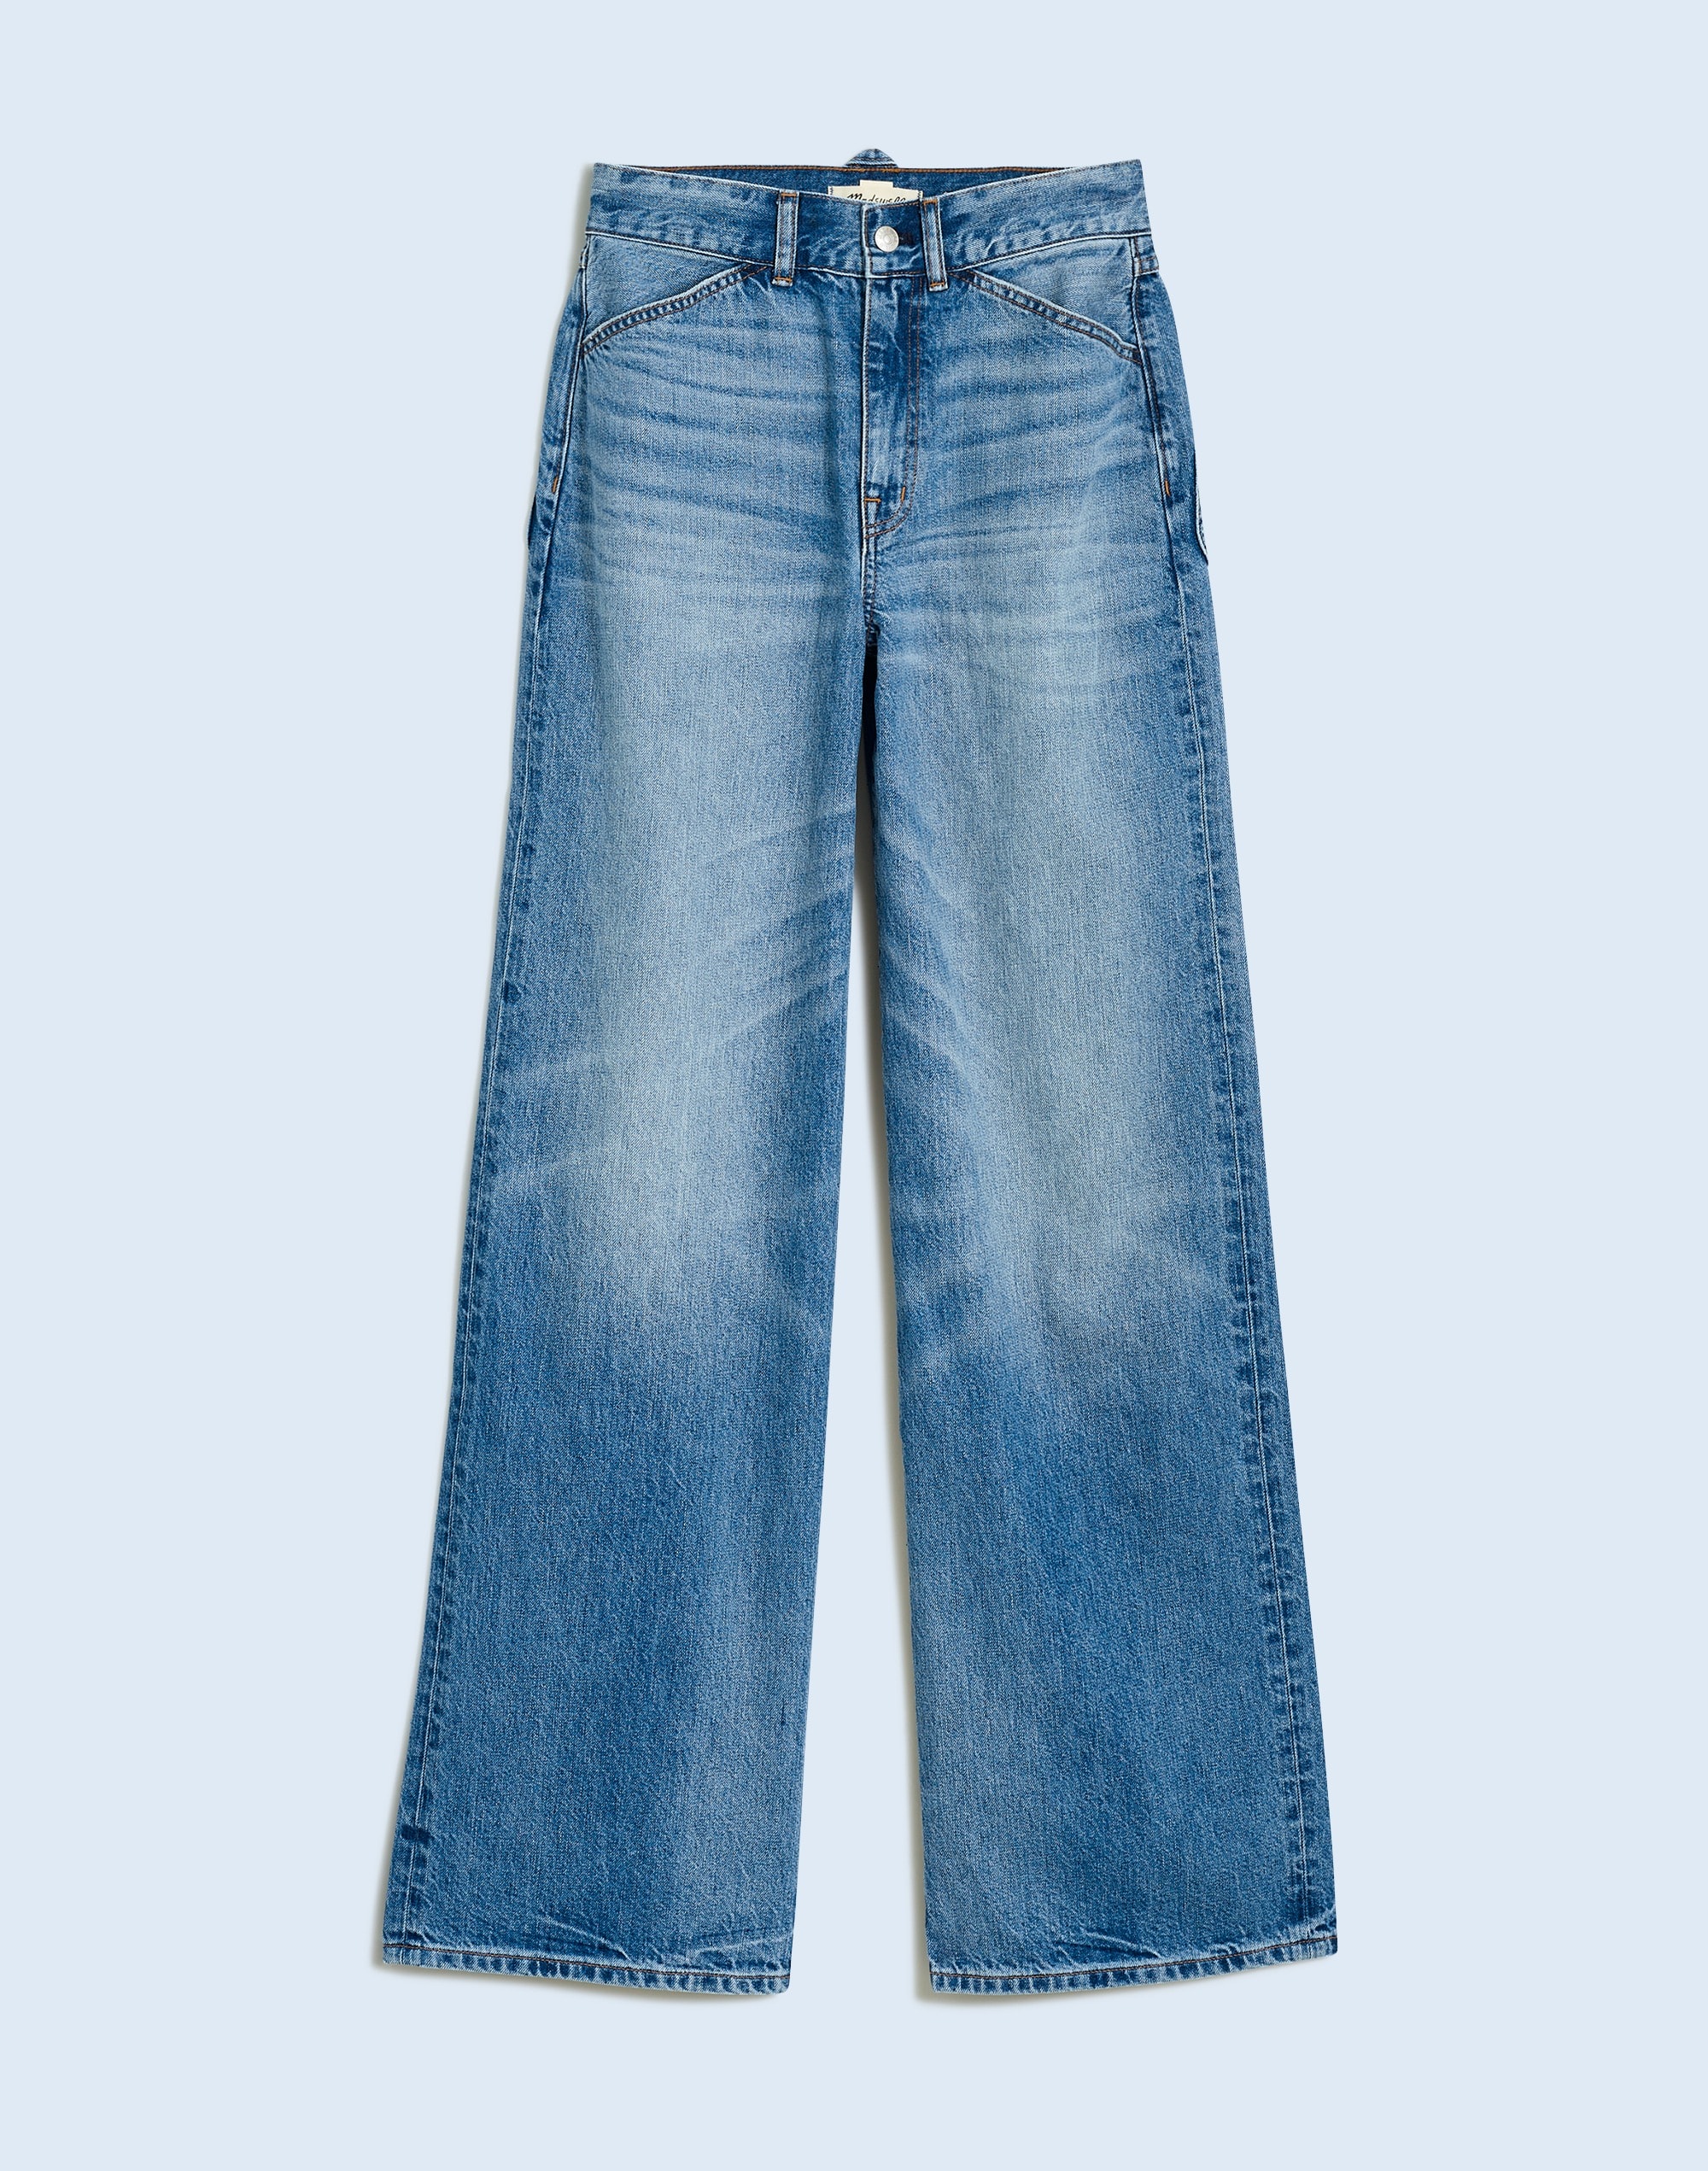 Madewell x Kaihara Superwide-Leg Jeans Sanborn Wash